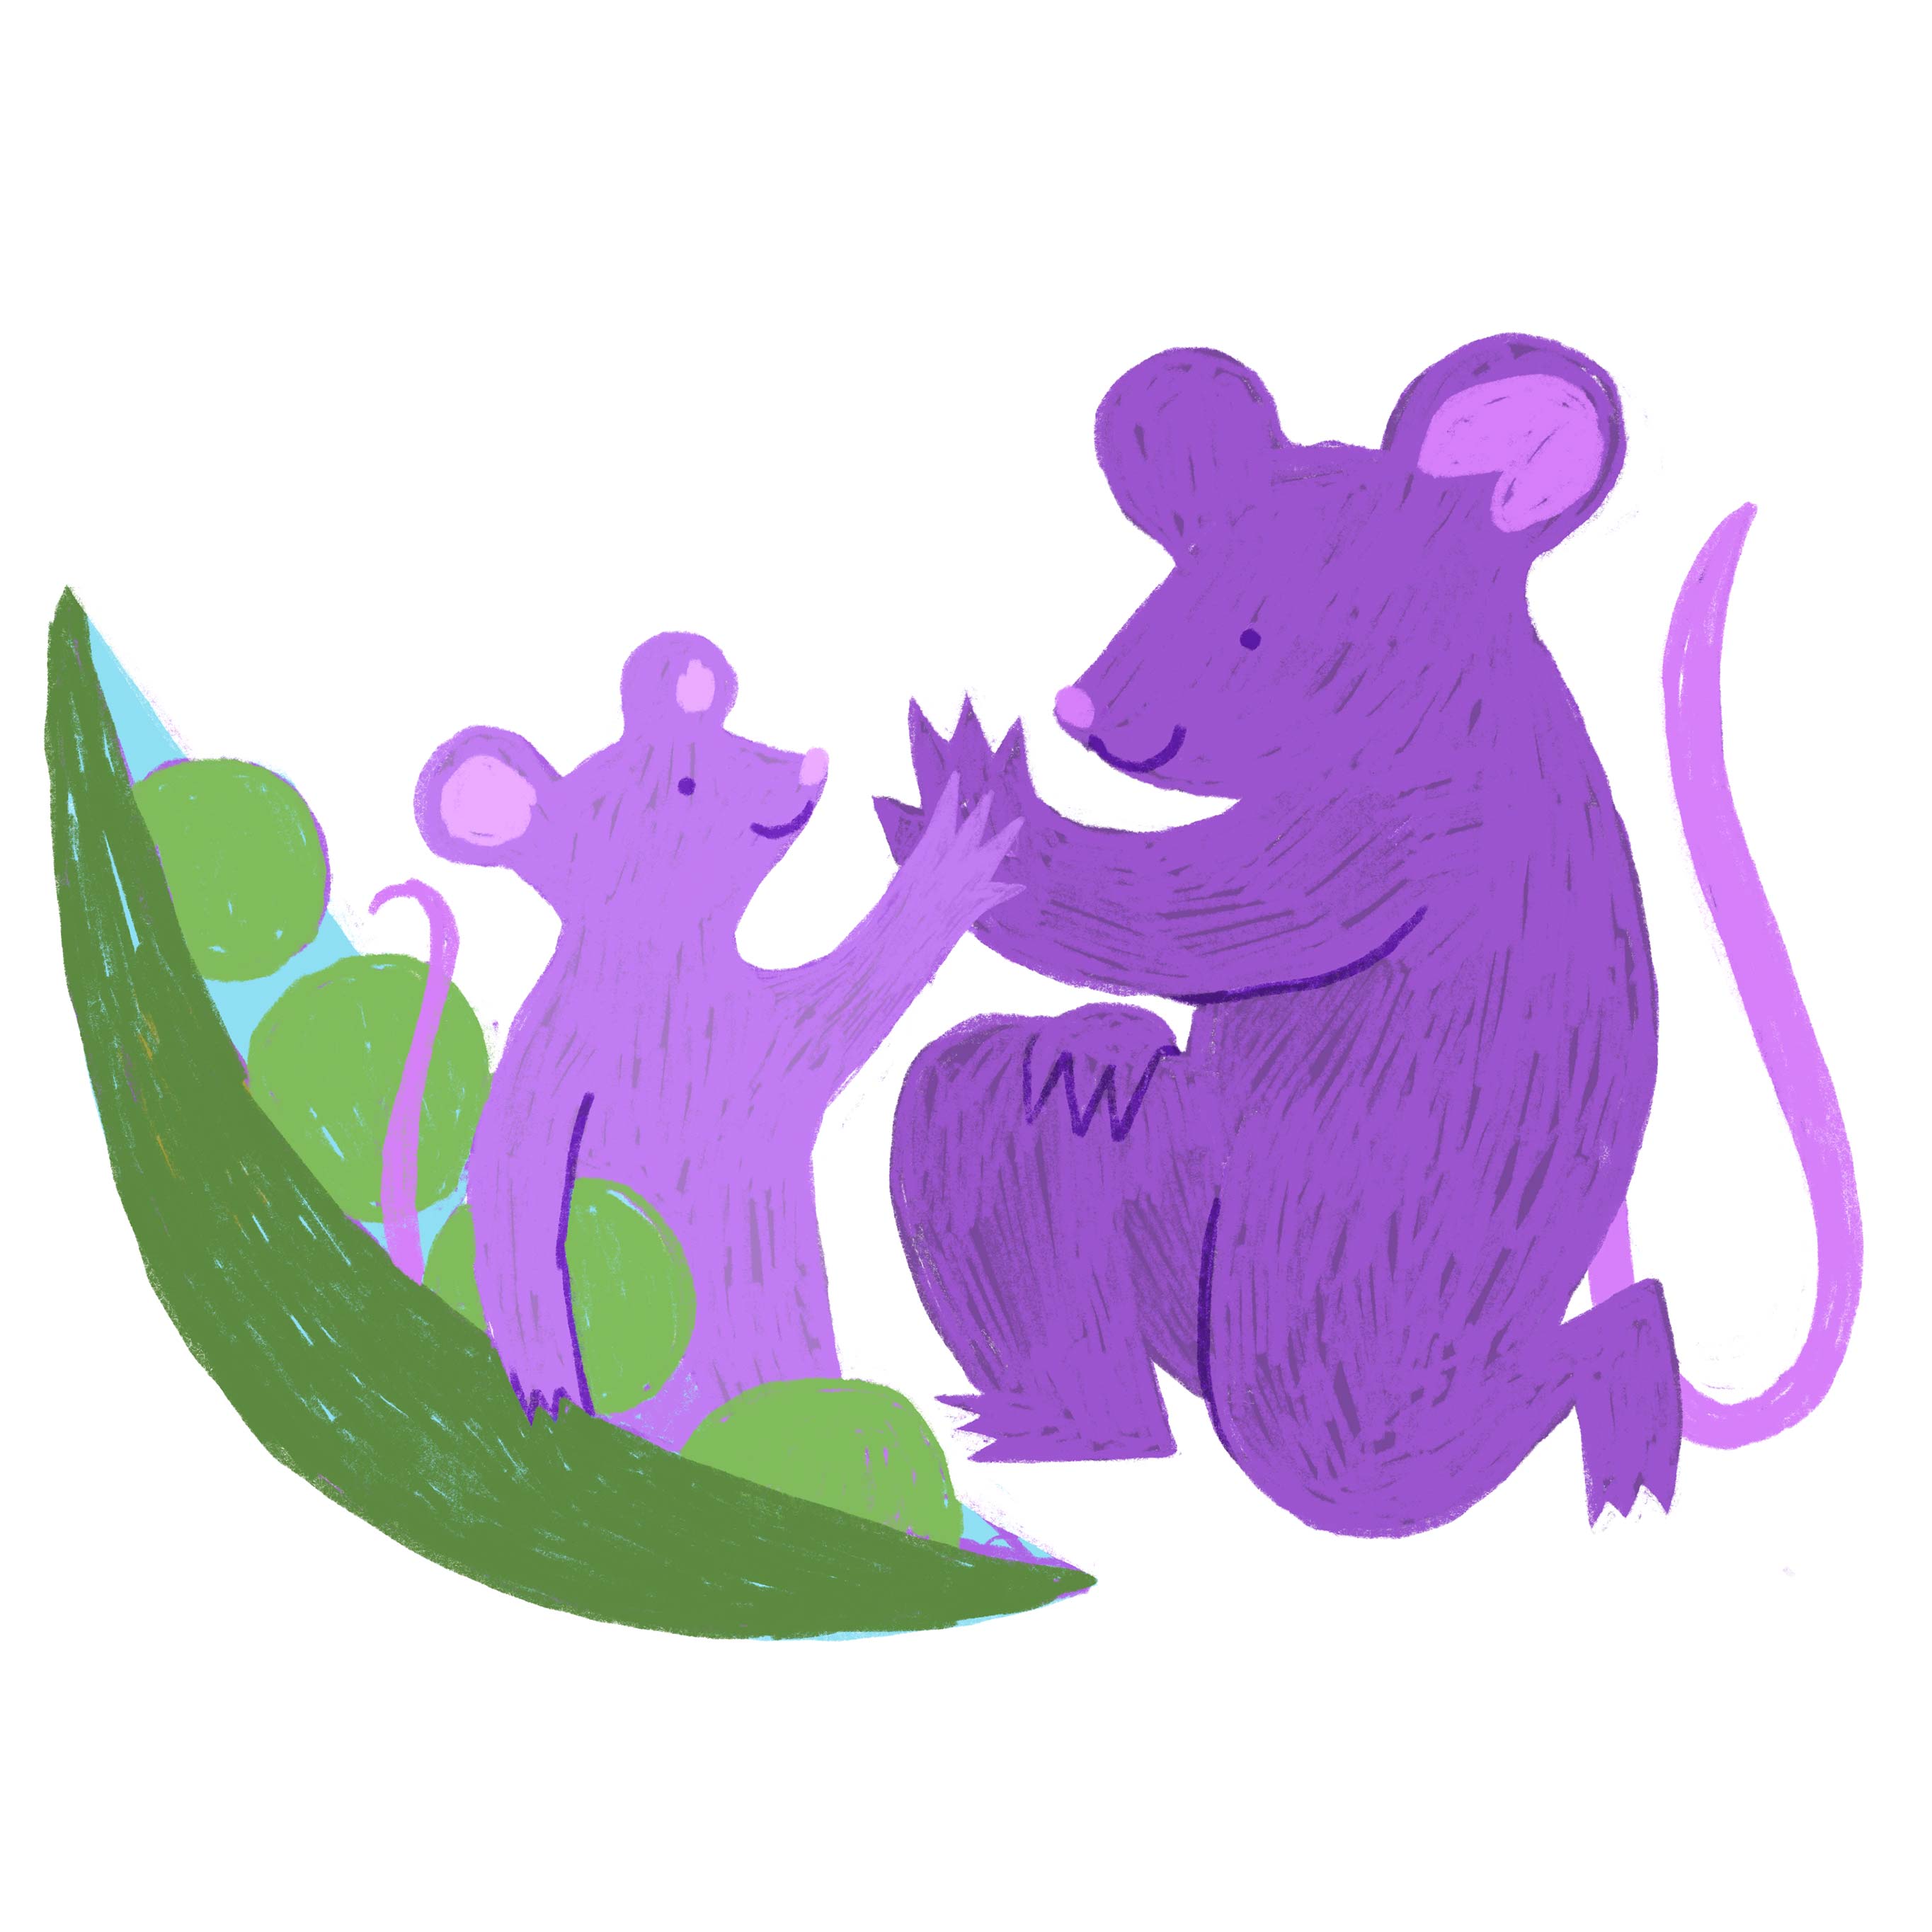 A purple rat high-fives a smaller purple rat in a pea pod.